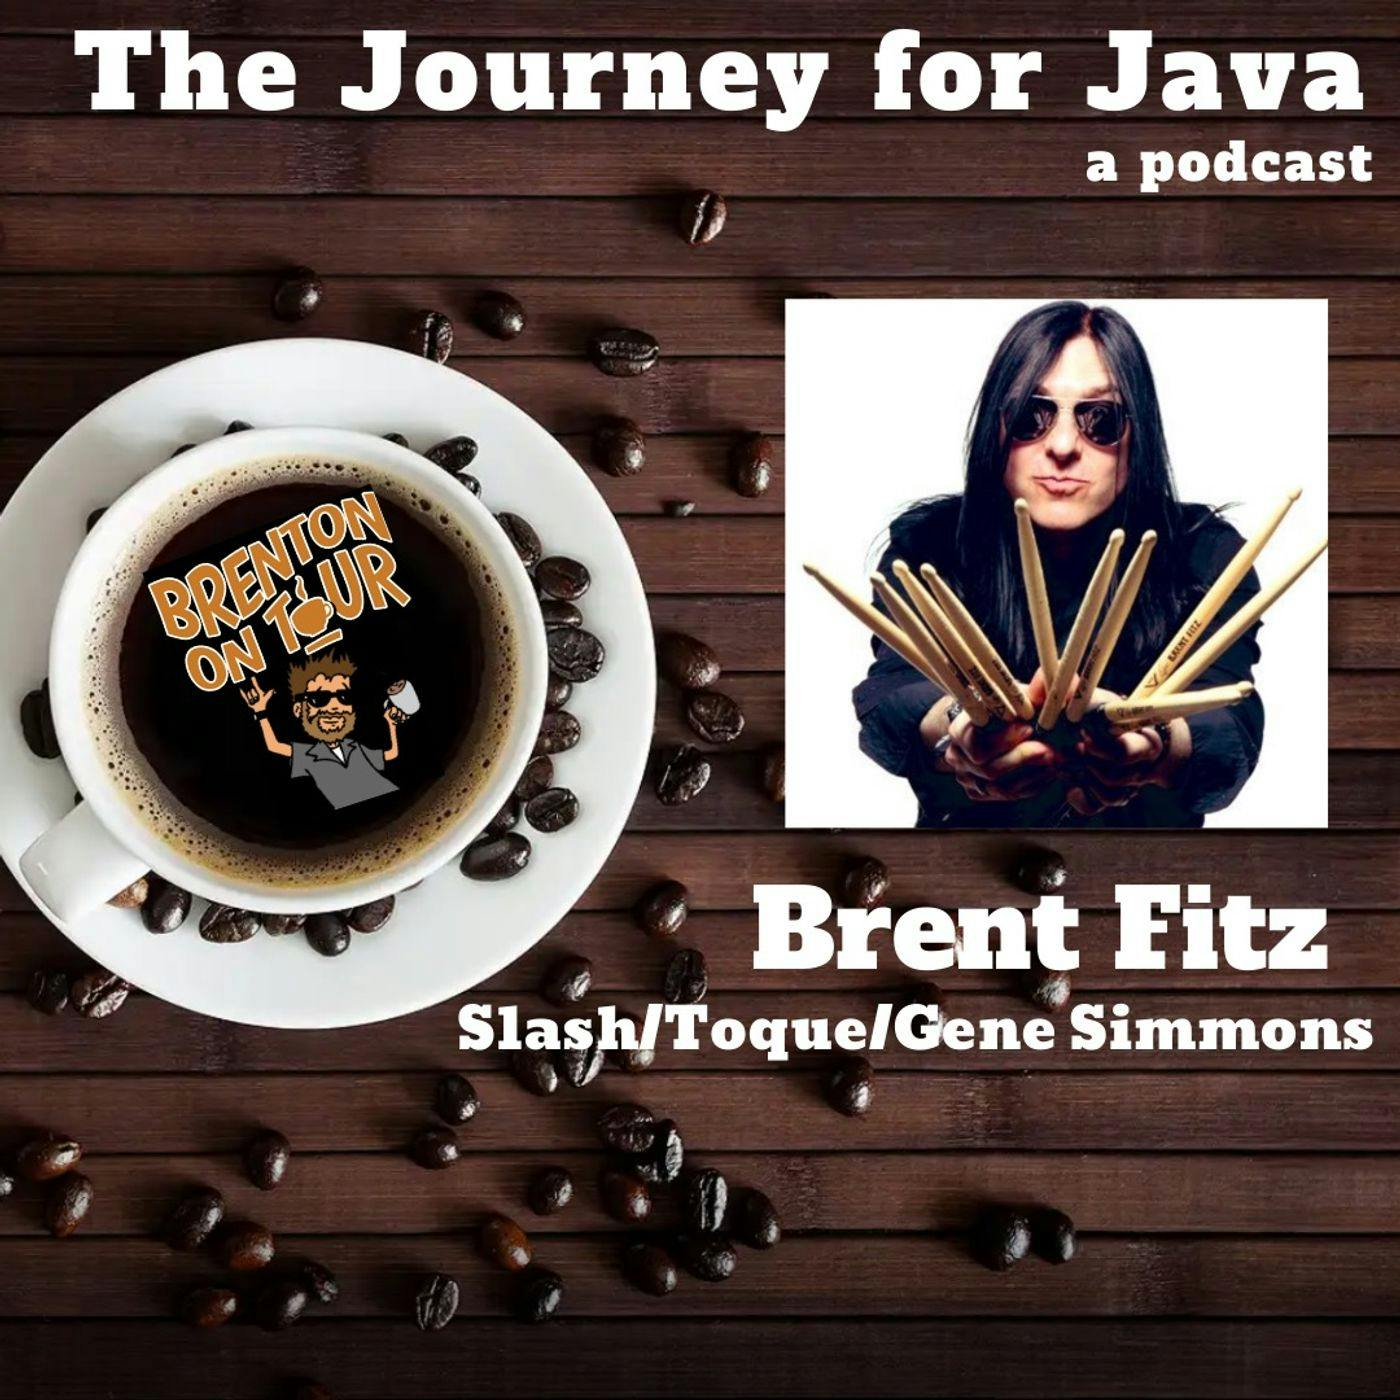 Brent Fitz  (Slash, Toque, Gene Simmons Band)